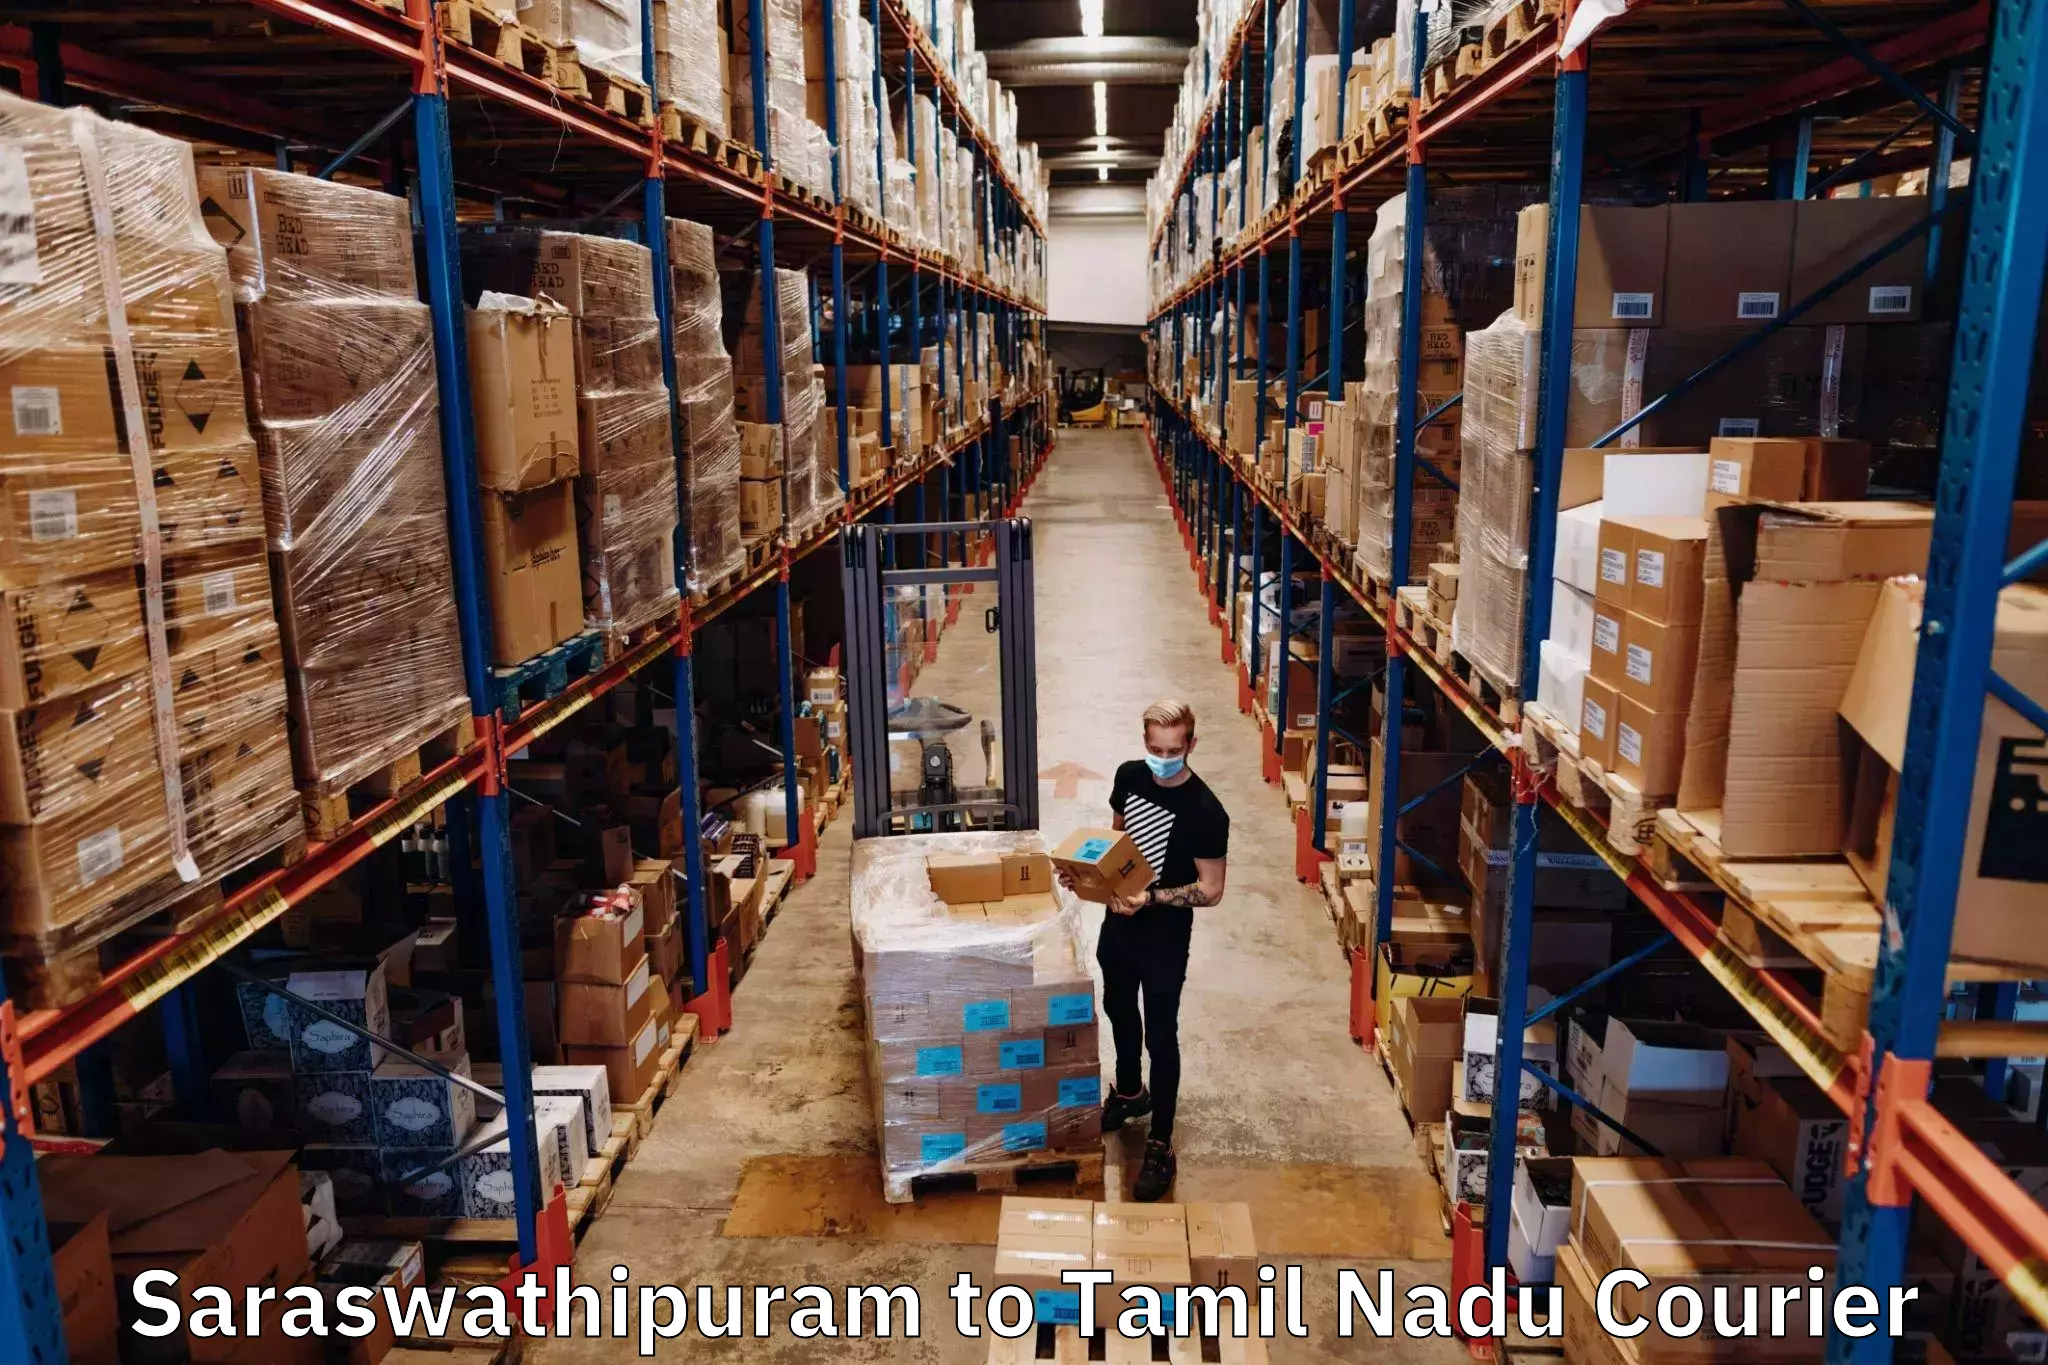 Courier service booking Saraswathipuram to Tamil Nadu